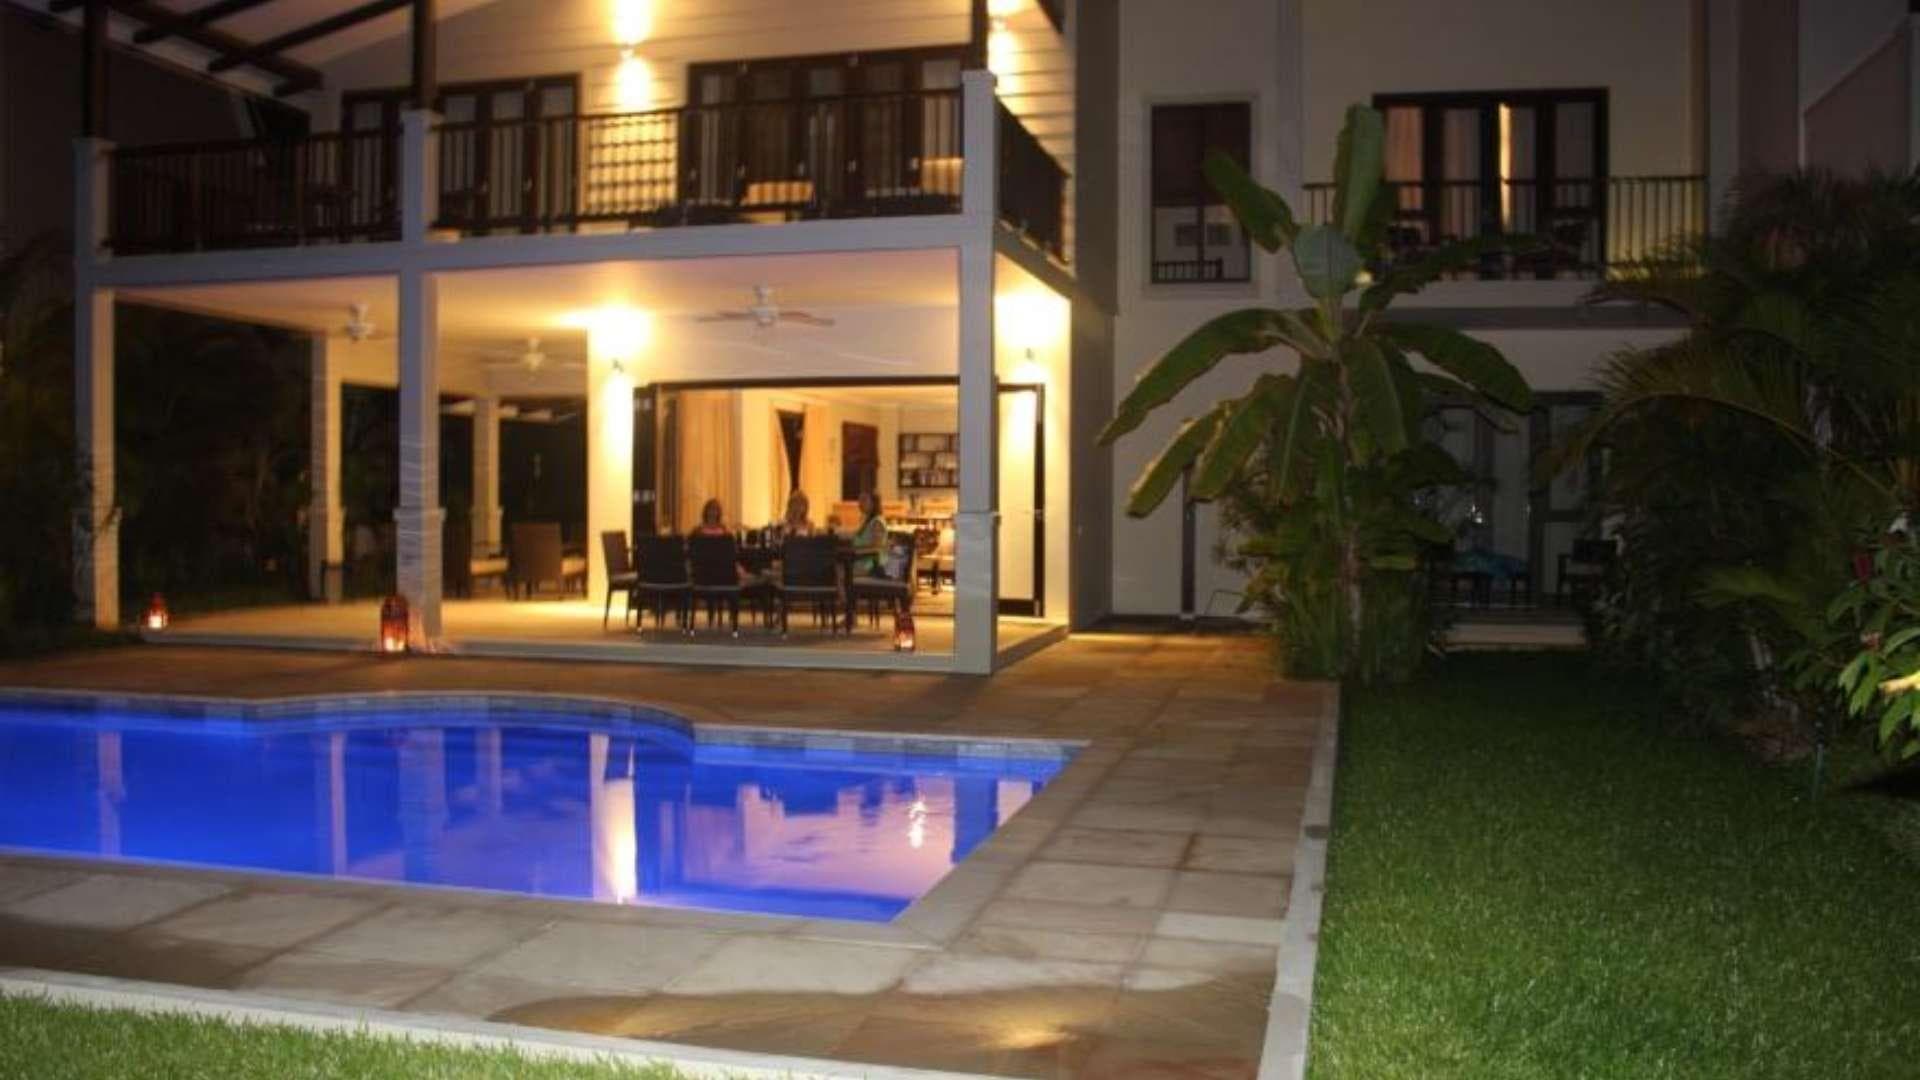 4 Bedroom Villa For Sale Maisons Lp13167 26c6223734158200.jpg